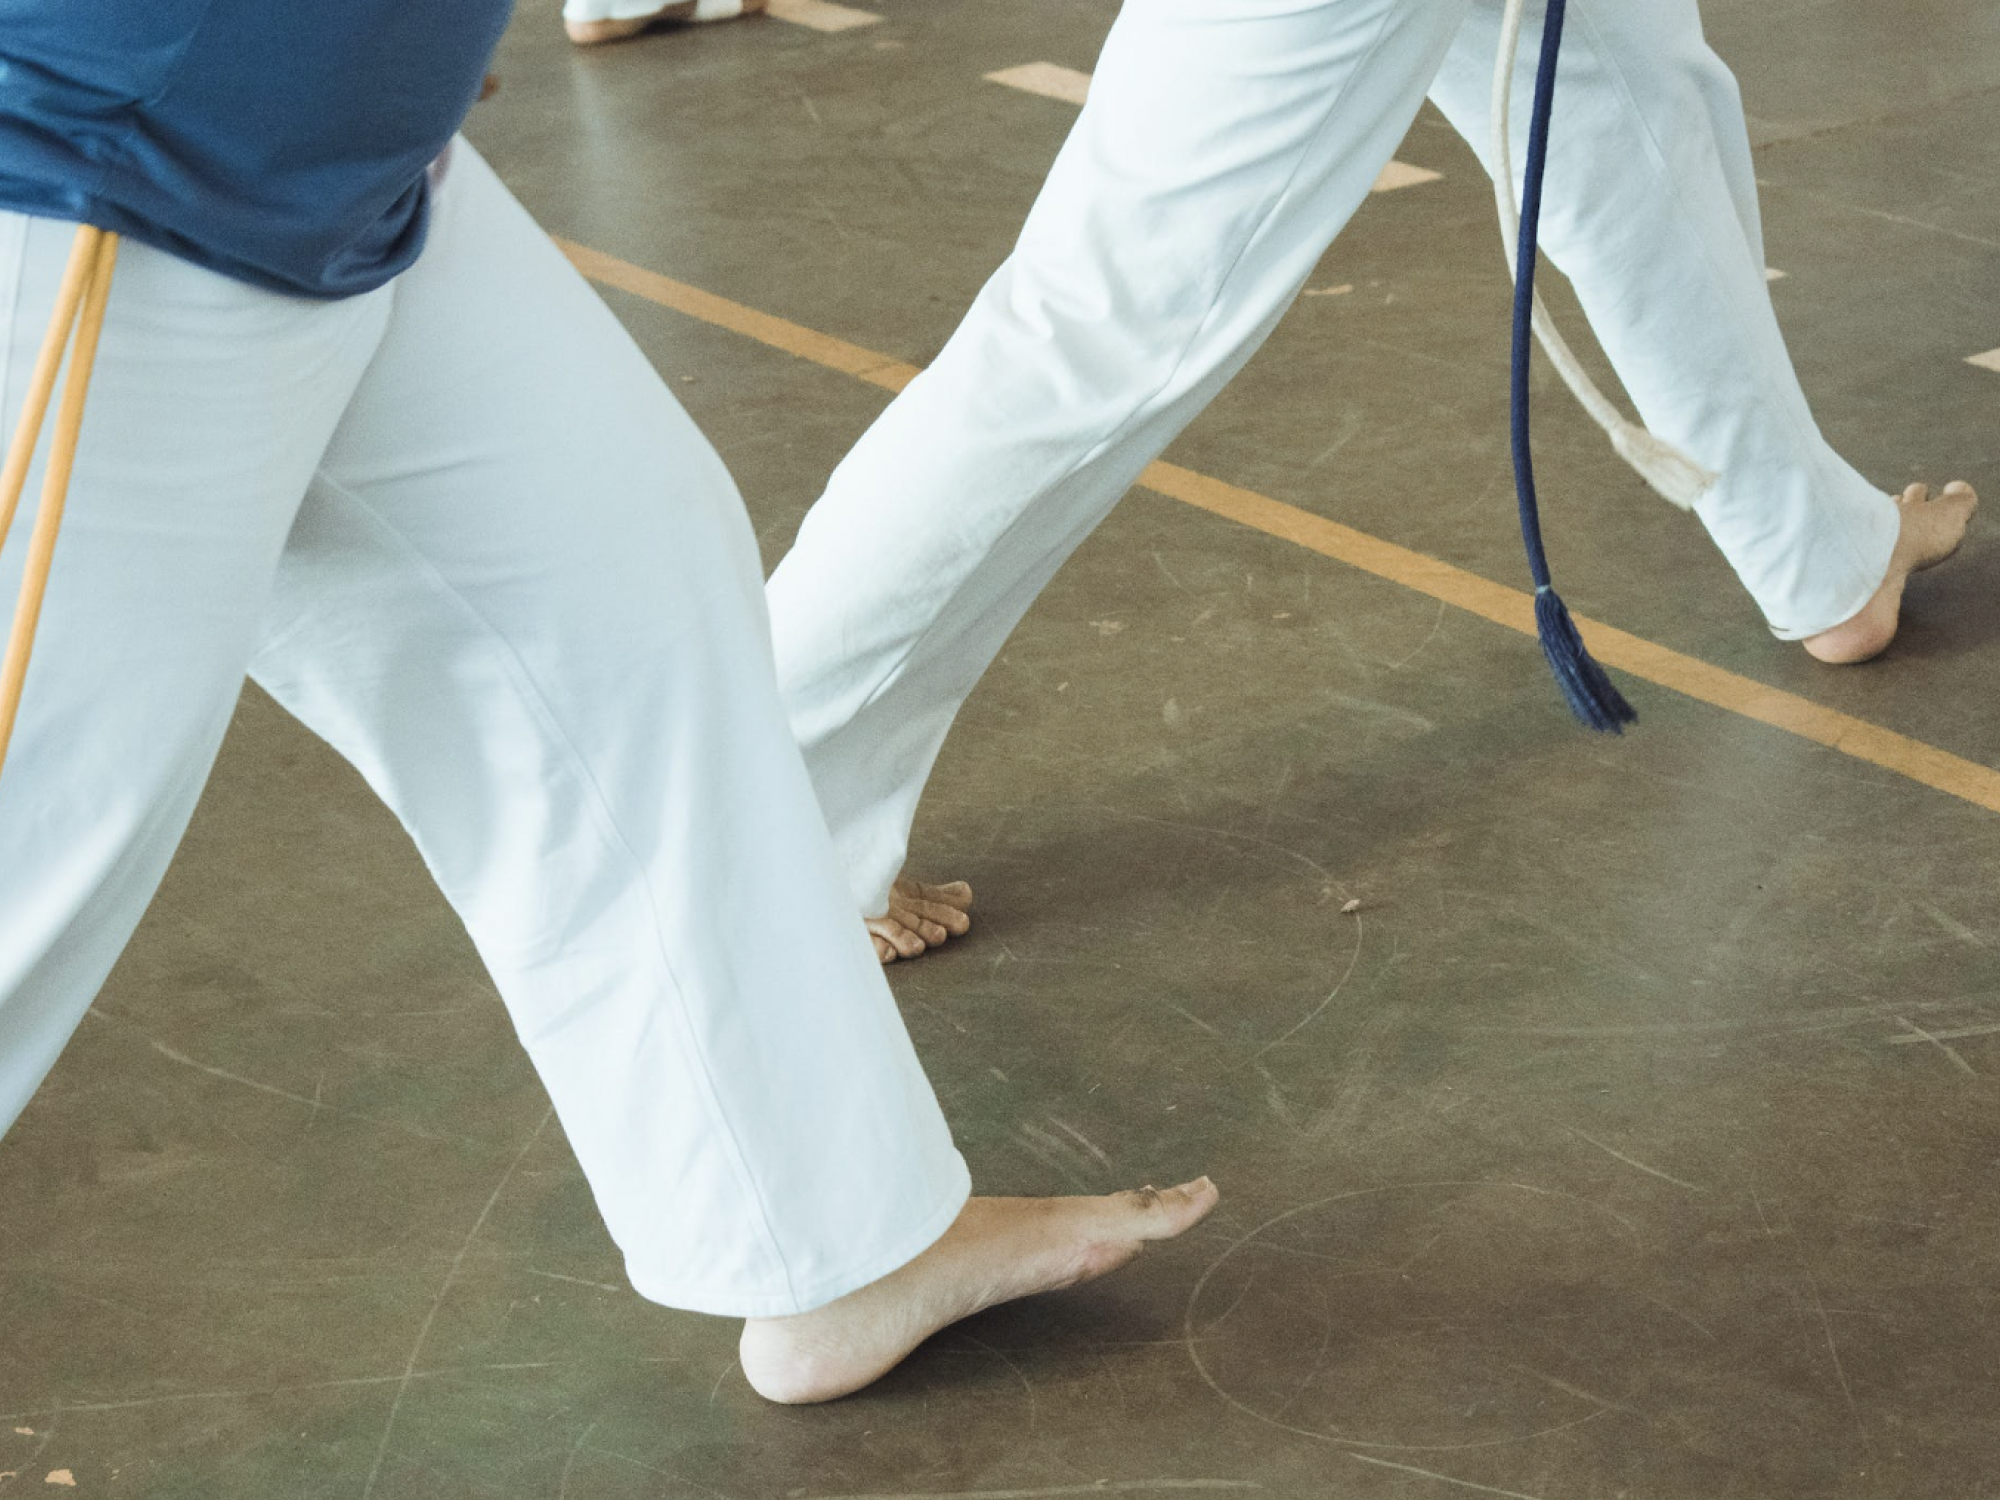 Hong Martial Arts – Karate/TKD/Jiu Jitsu